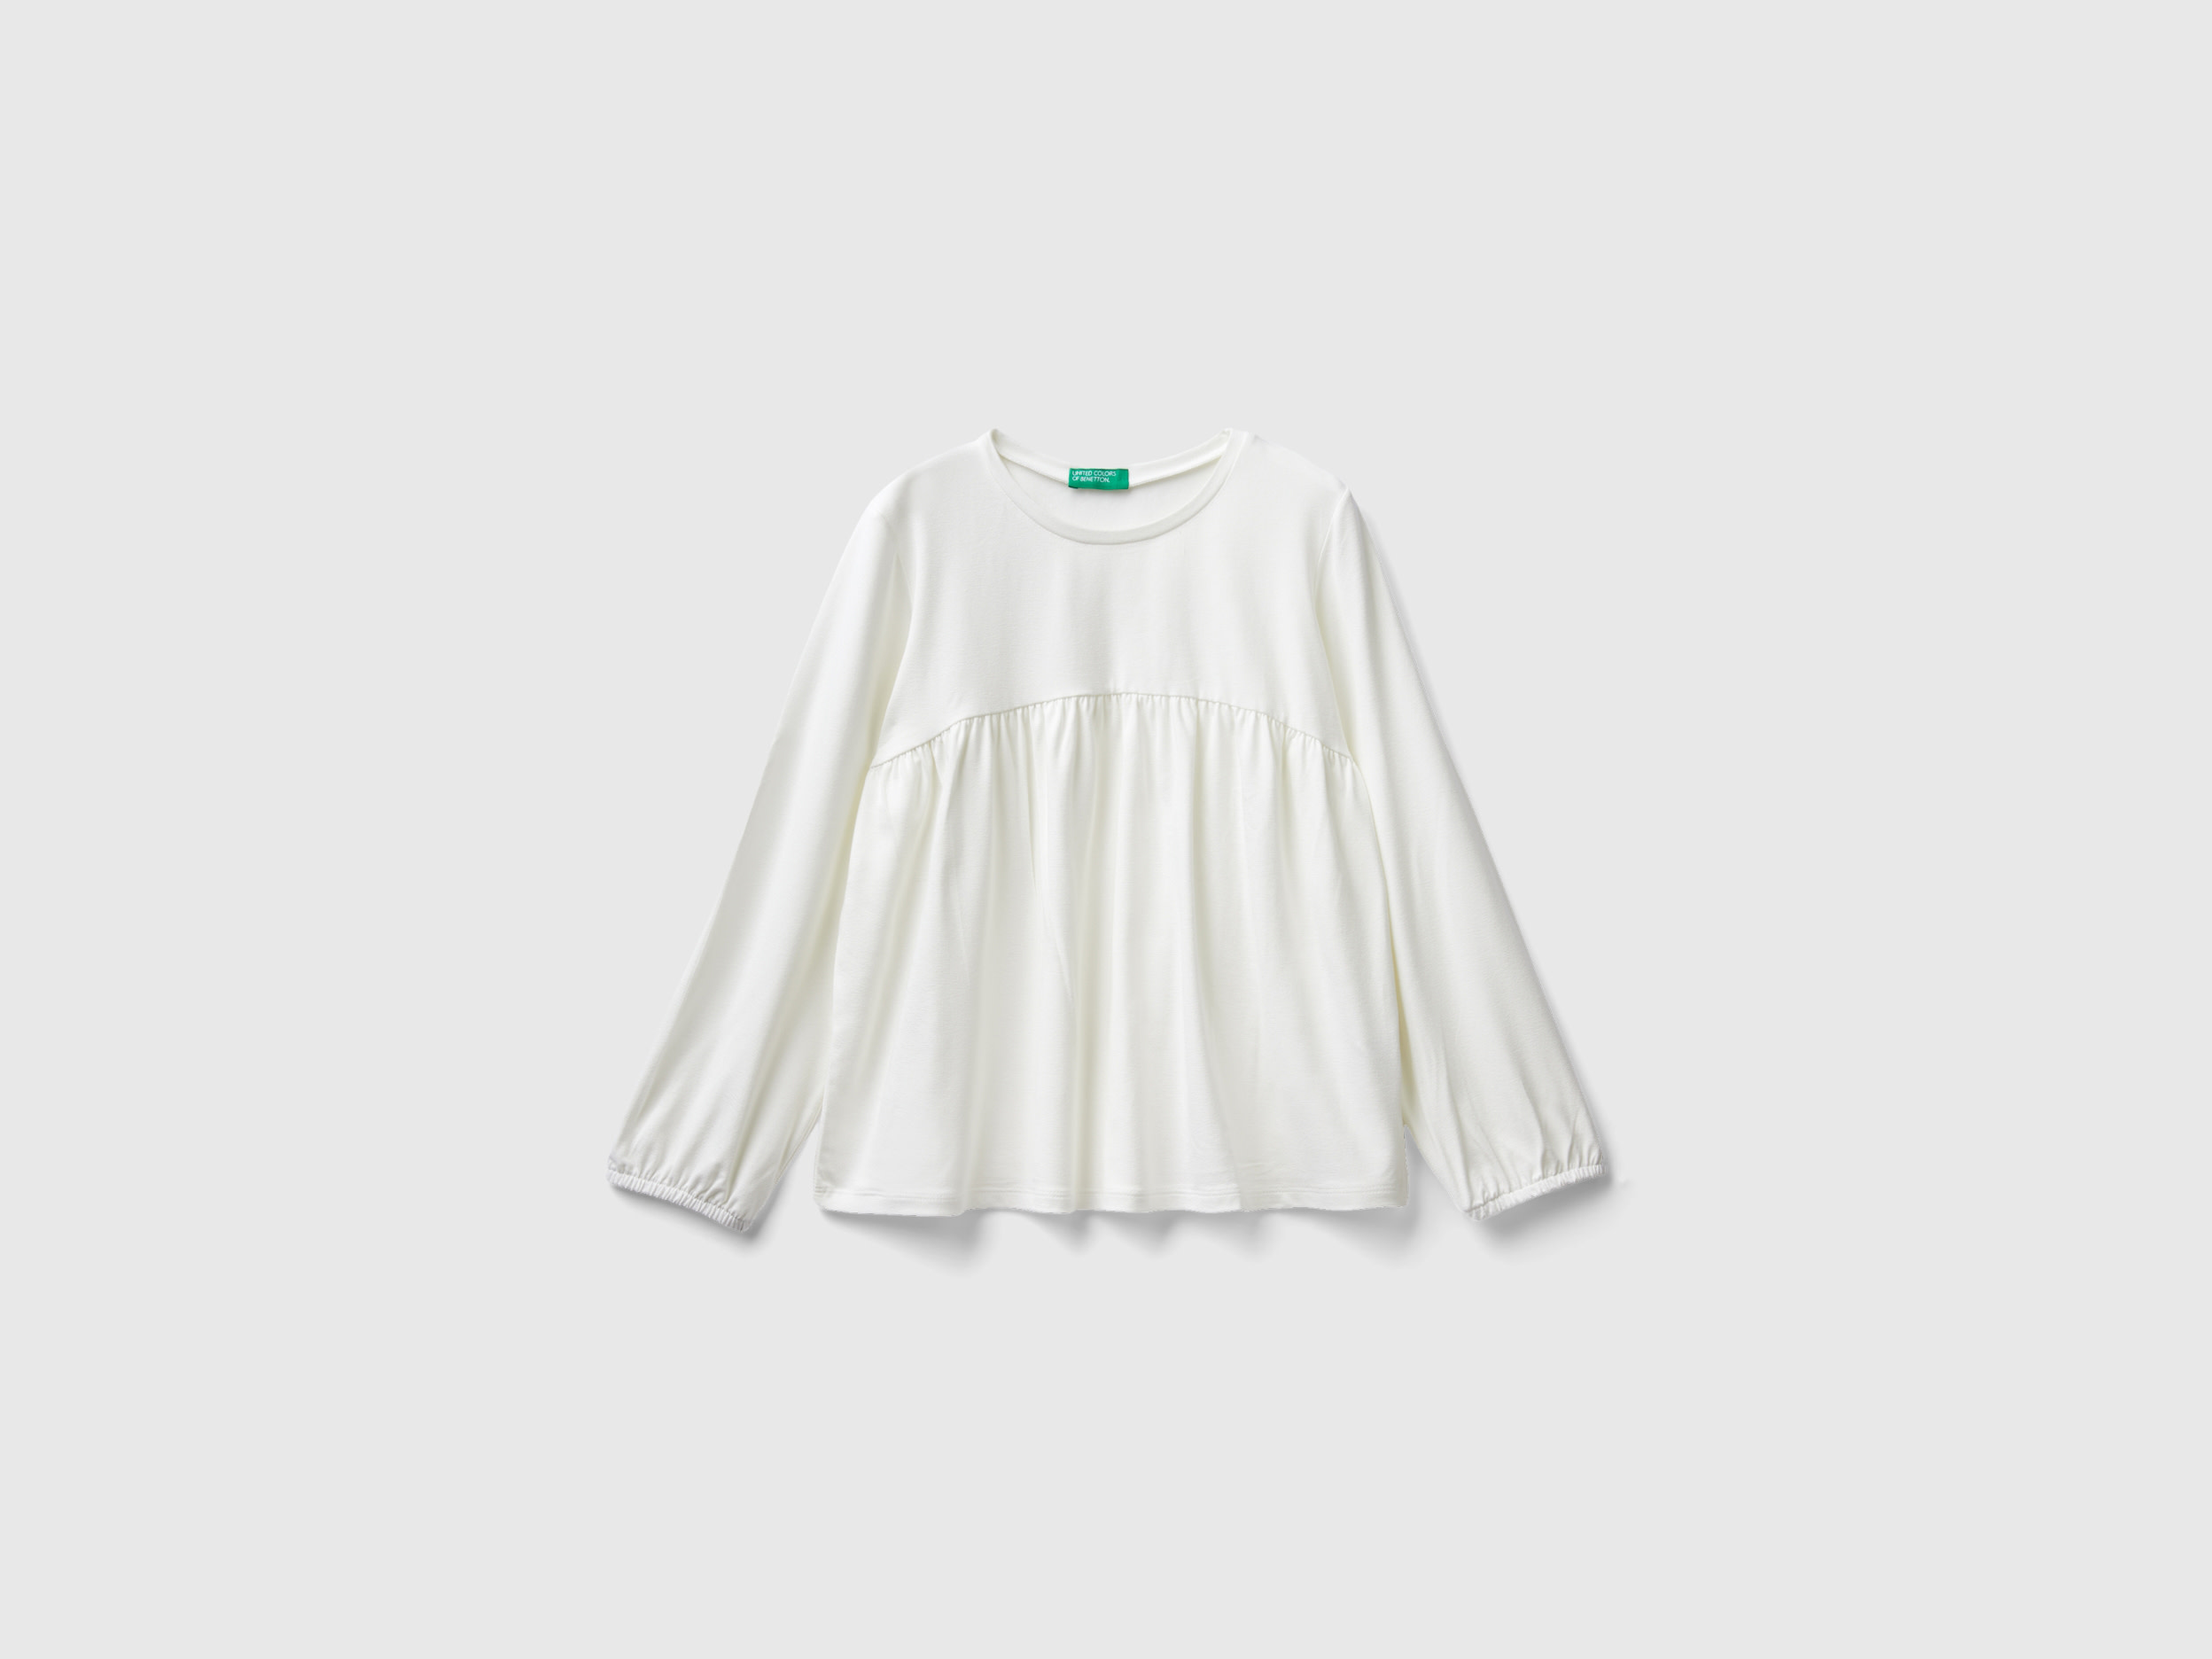 Benetton, Flowy Stretch T-shirt, size L, Creamy White, Kids